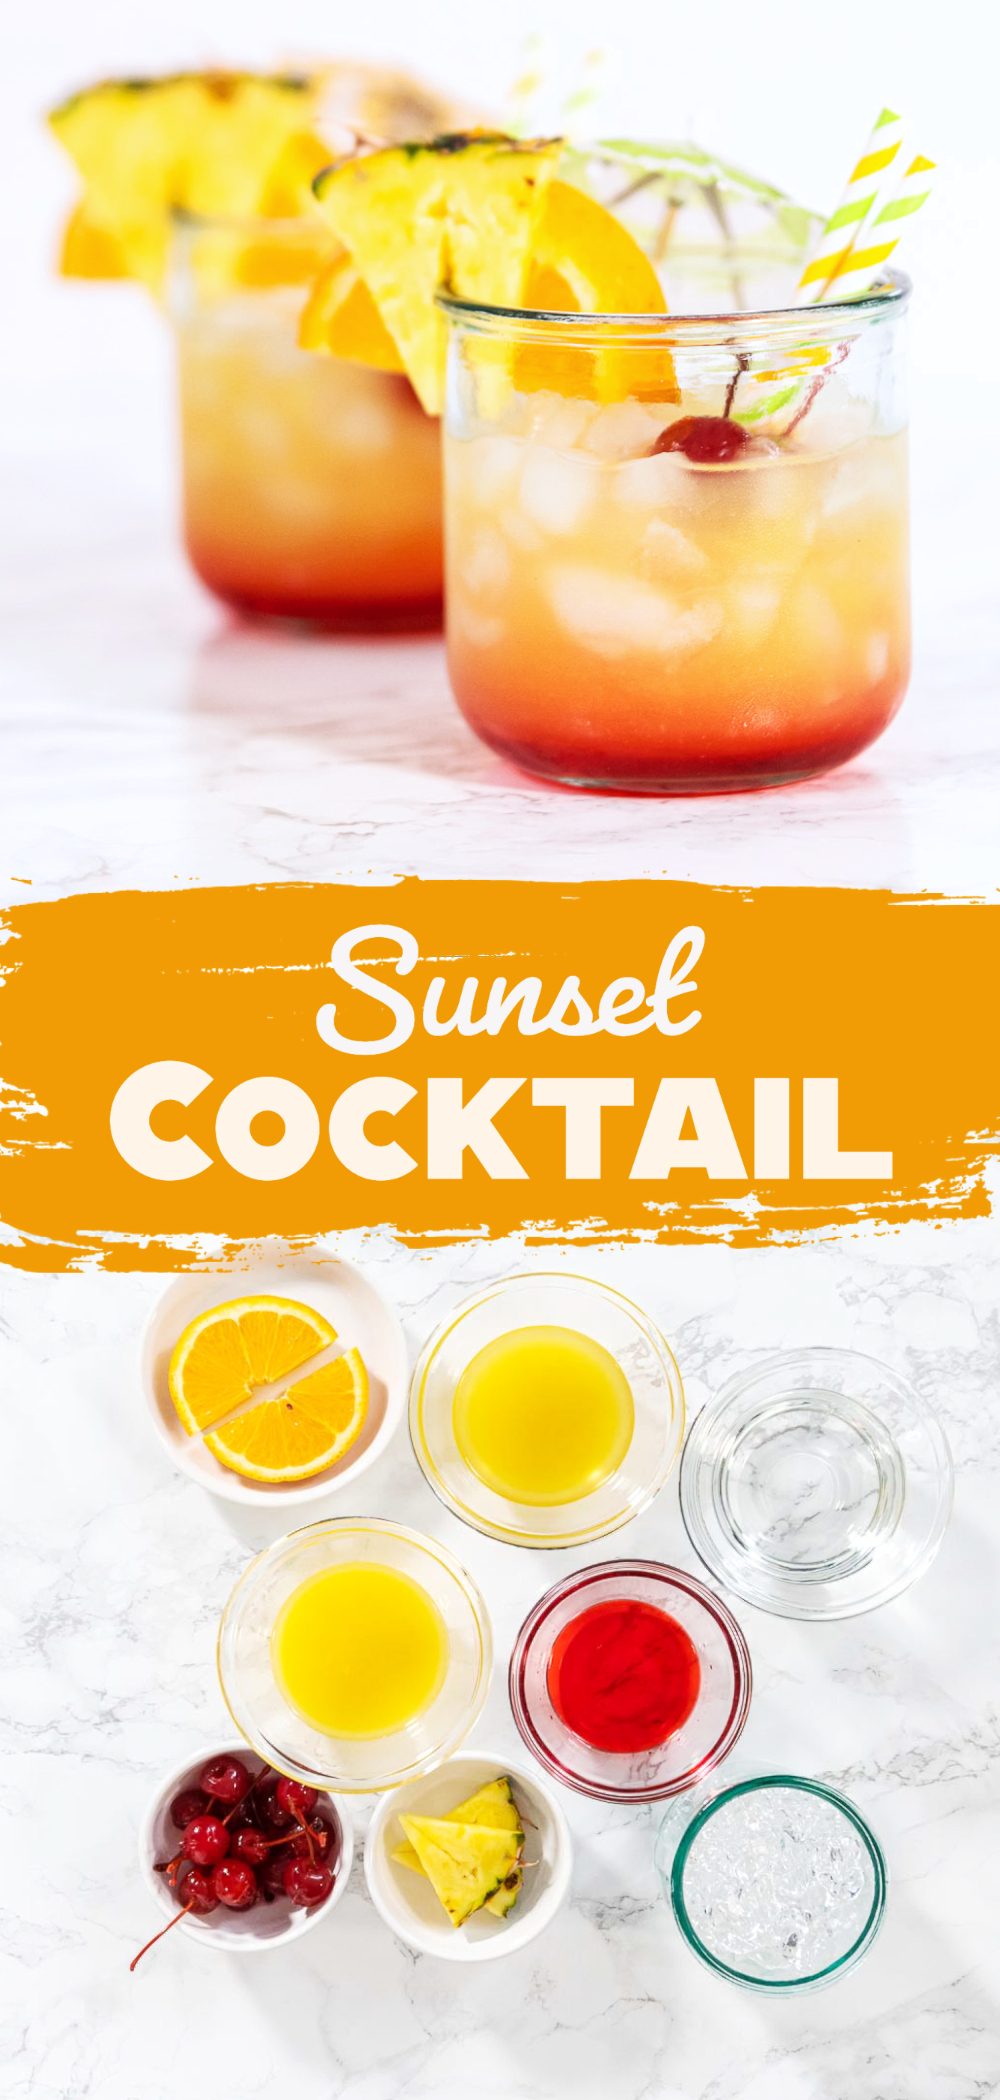 Sunset Cocktail